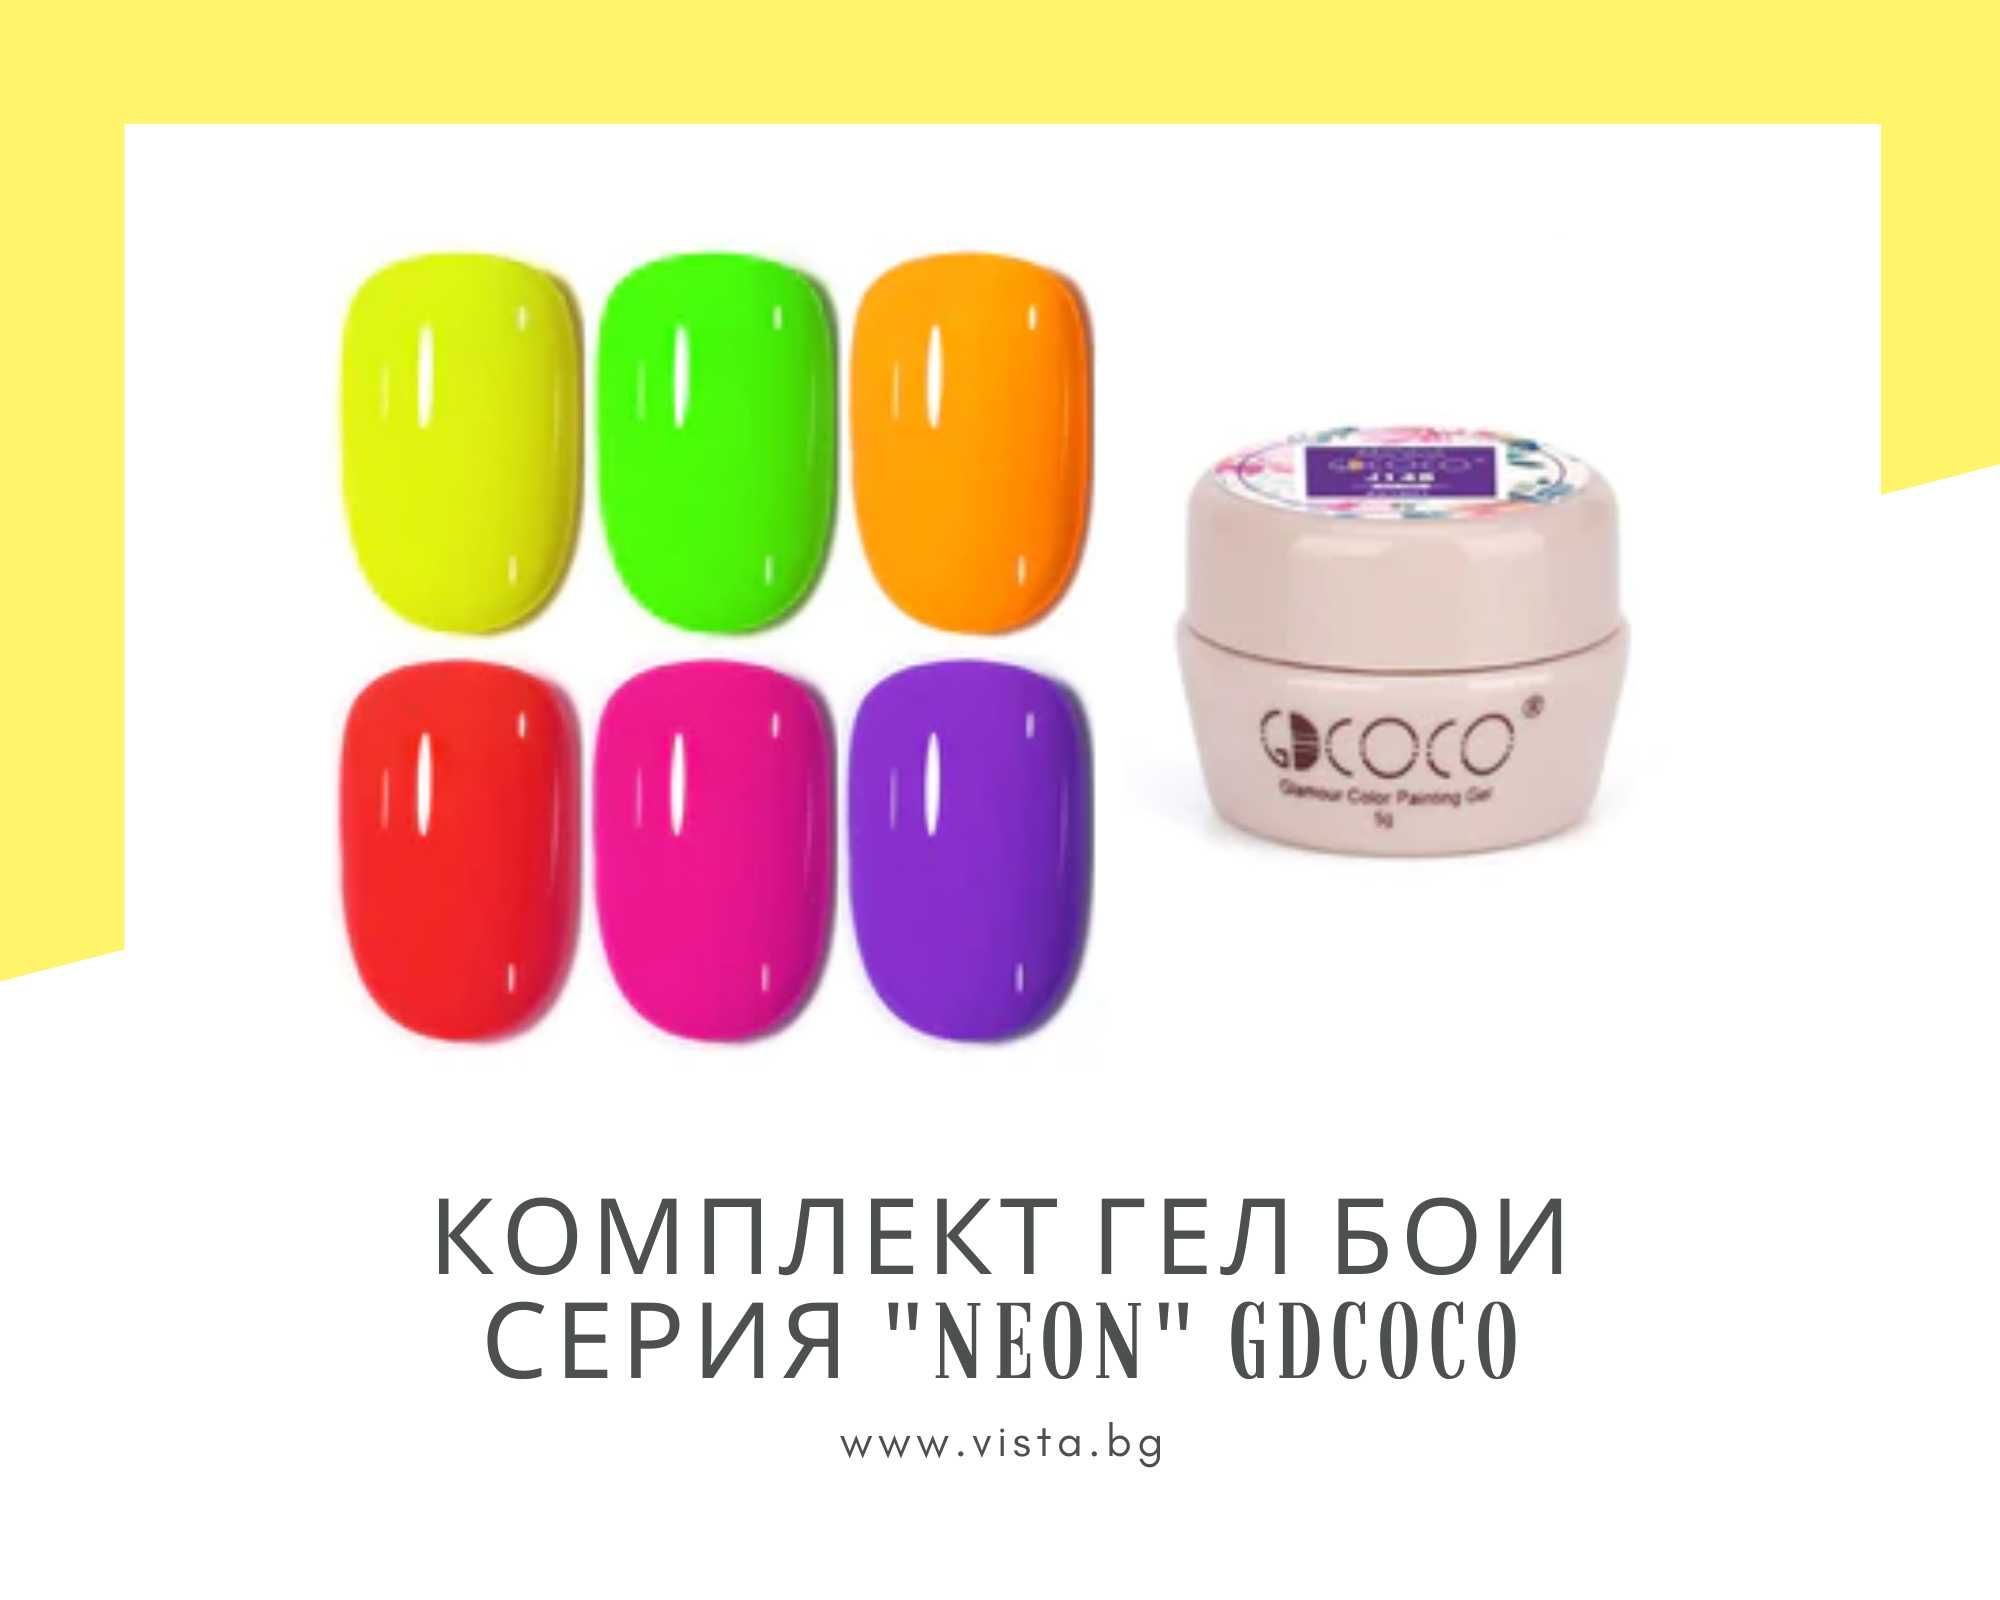 Комплект UV/LED неонови гел бои серия "Neon" GDCOCO – 6 броя